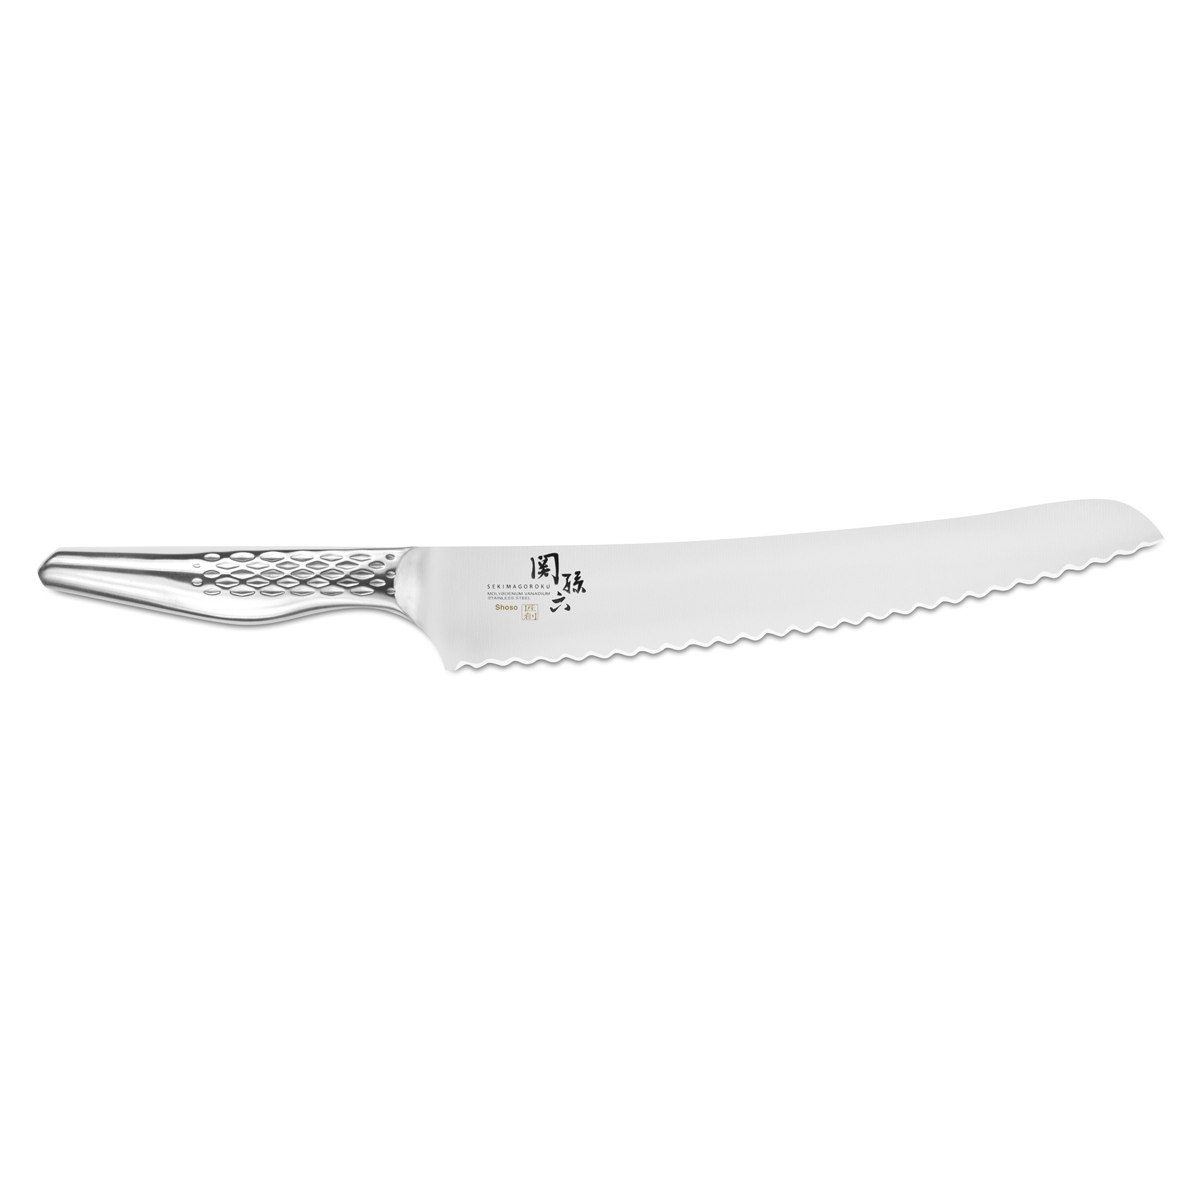 KAI Seki Magoroku Shoso Brotmesser 24 cm - 1K6 Stahlklinge - Edelstahlgriff